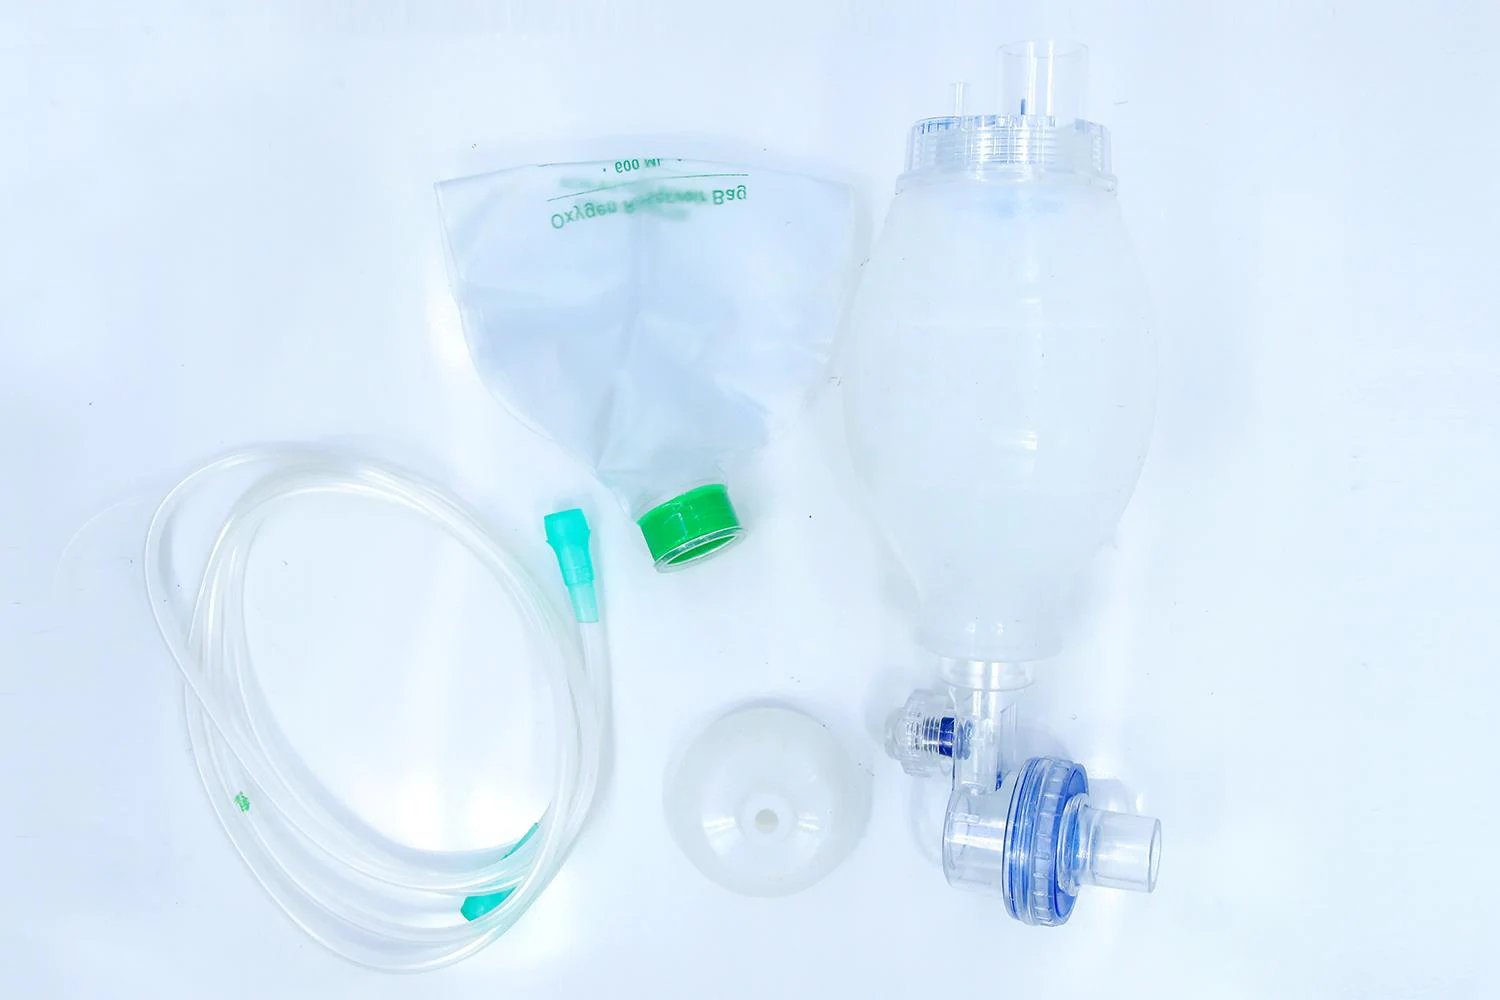 Ambu Bag Adult Silicon Manual Resuscitator Oxygen Tube MaskCPR First Aid  kit  eBay